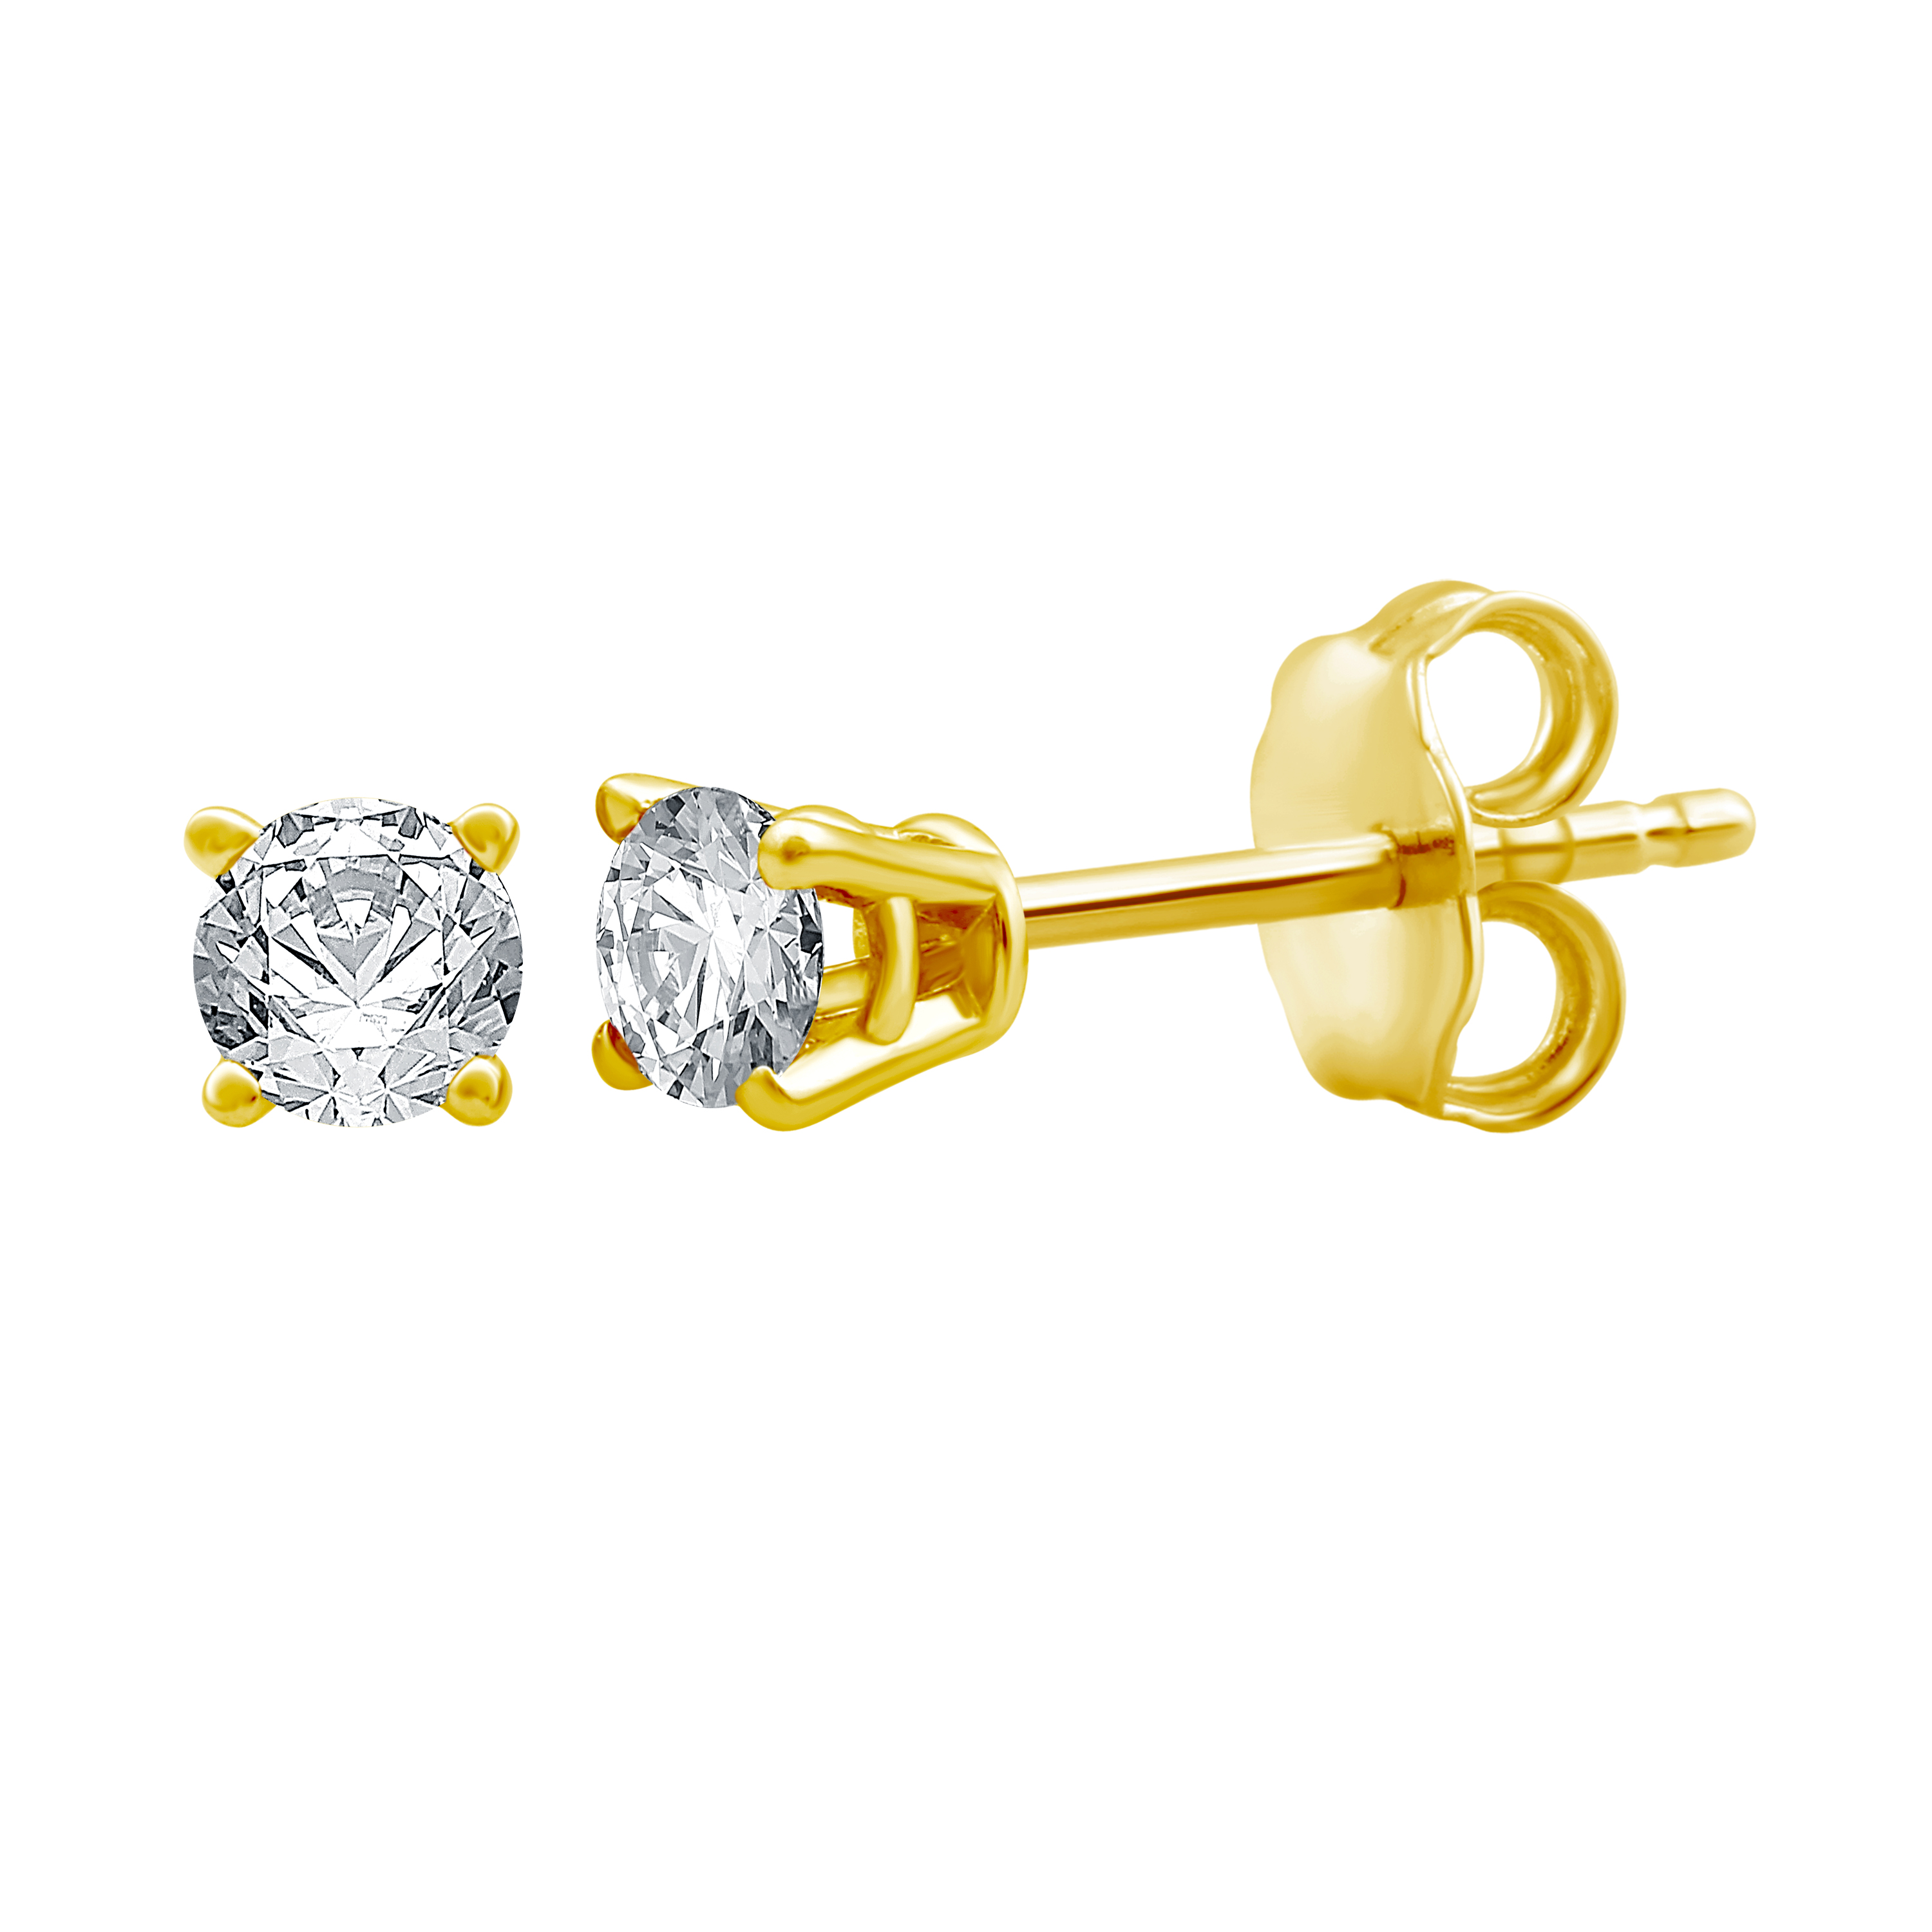 10K Yellow Gold 0.25 CTTW Diamond Stud Earrings